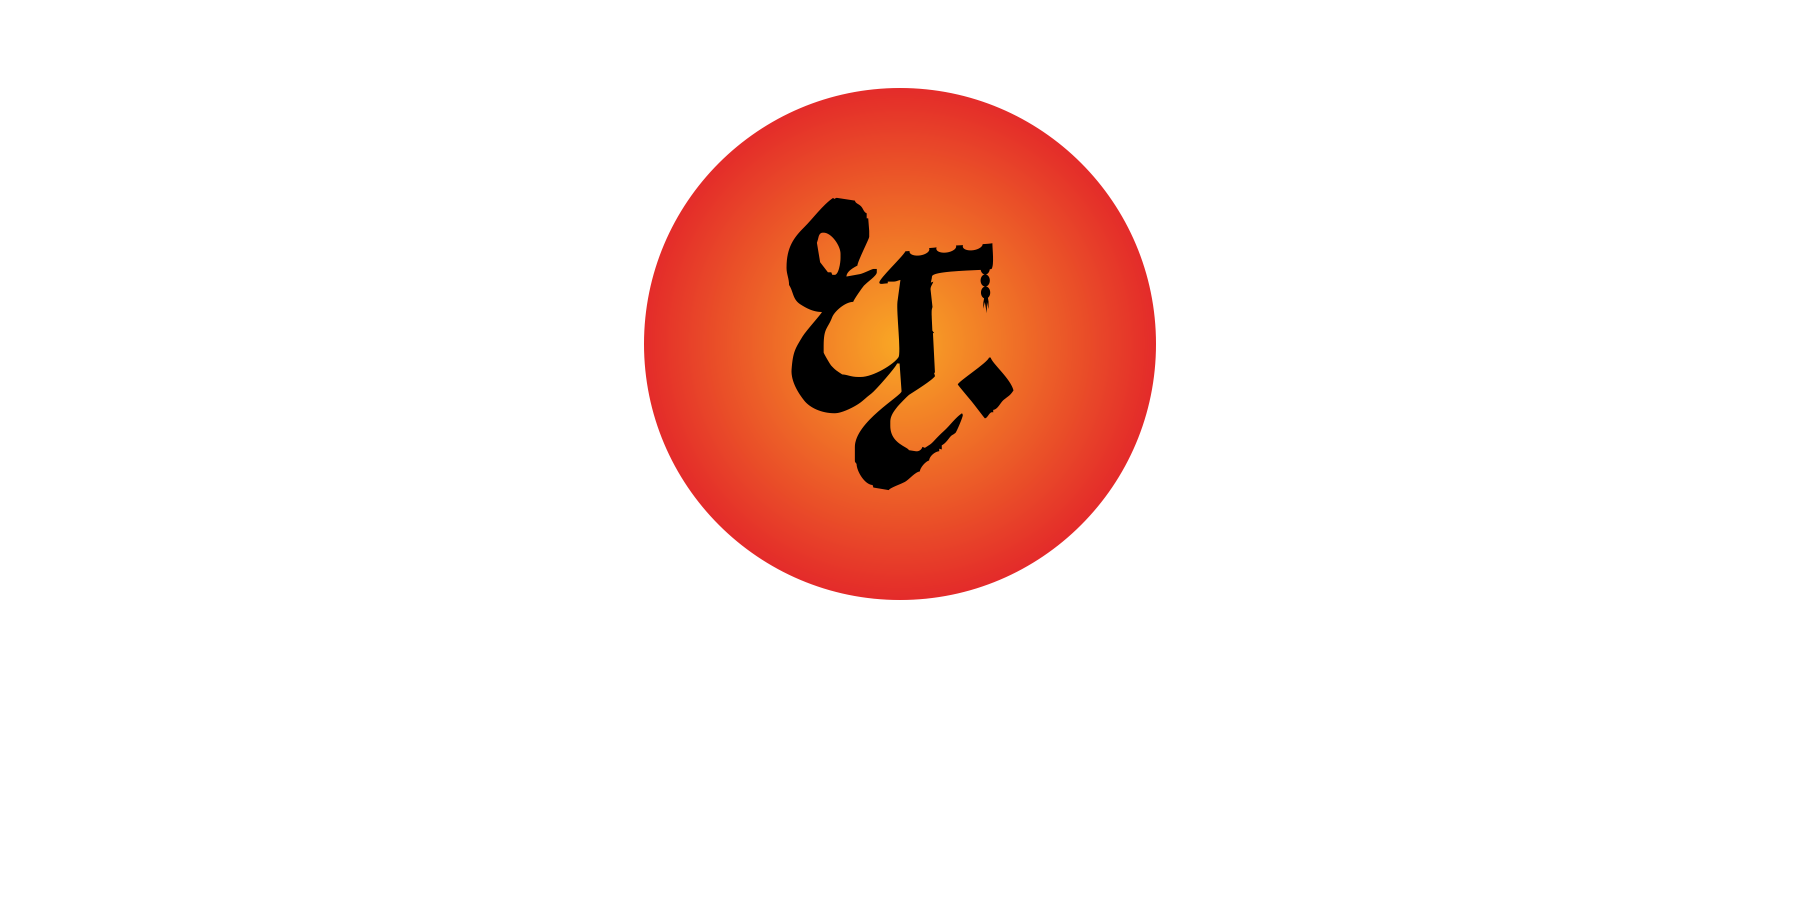 Dhrupad Gurukul